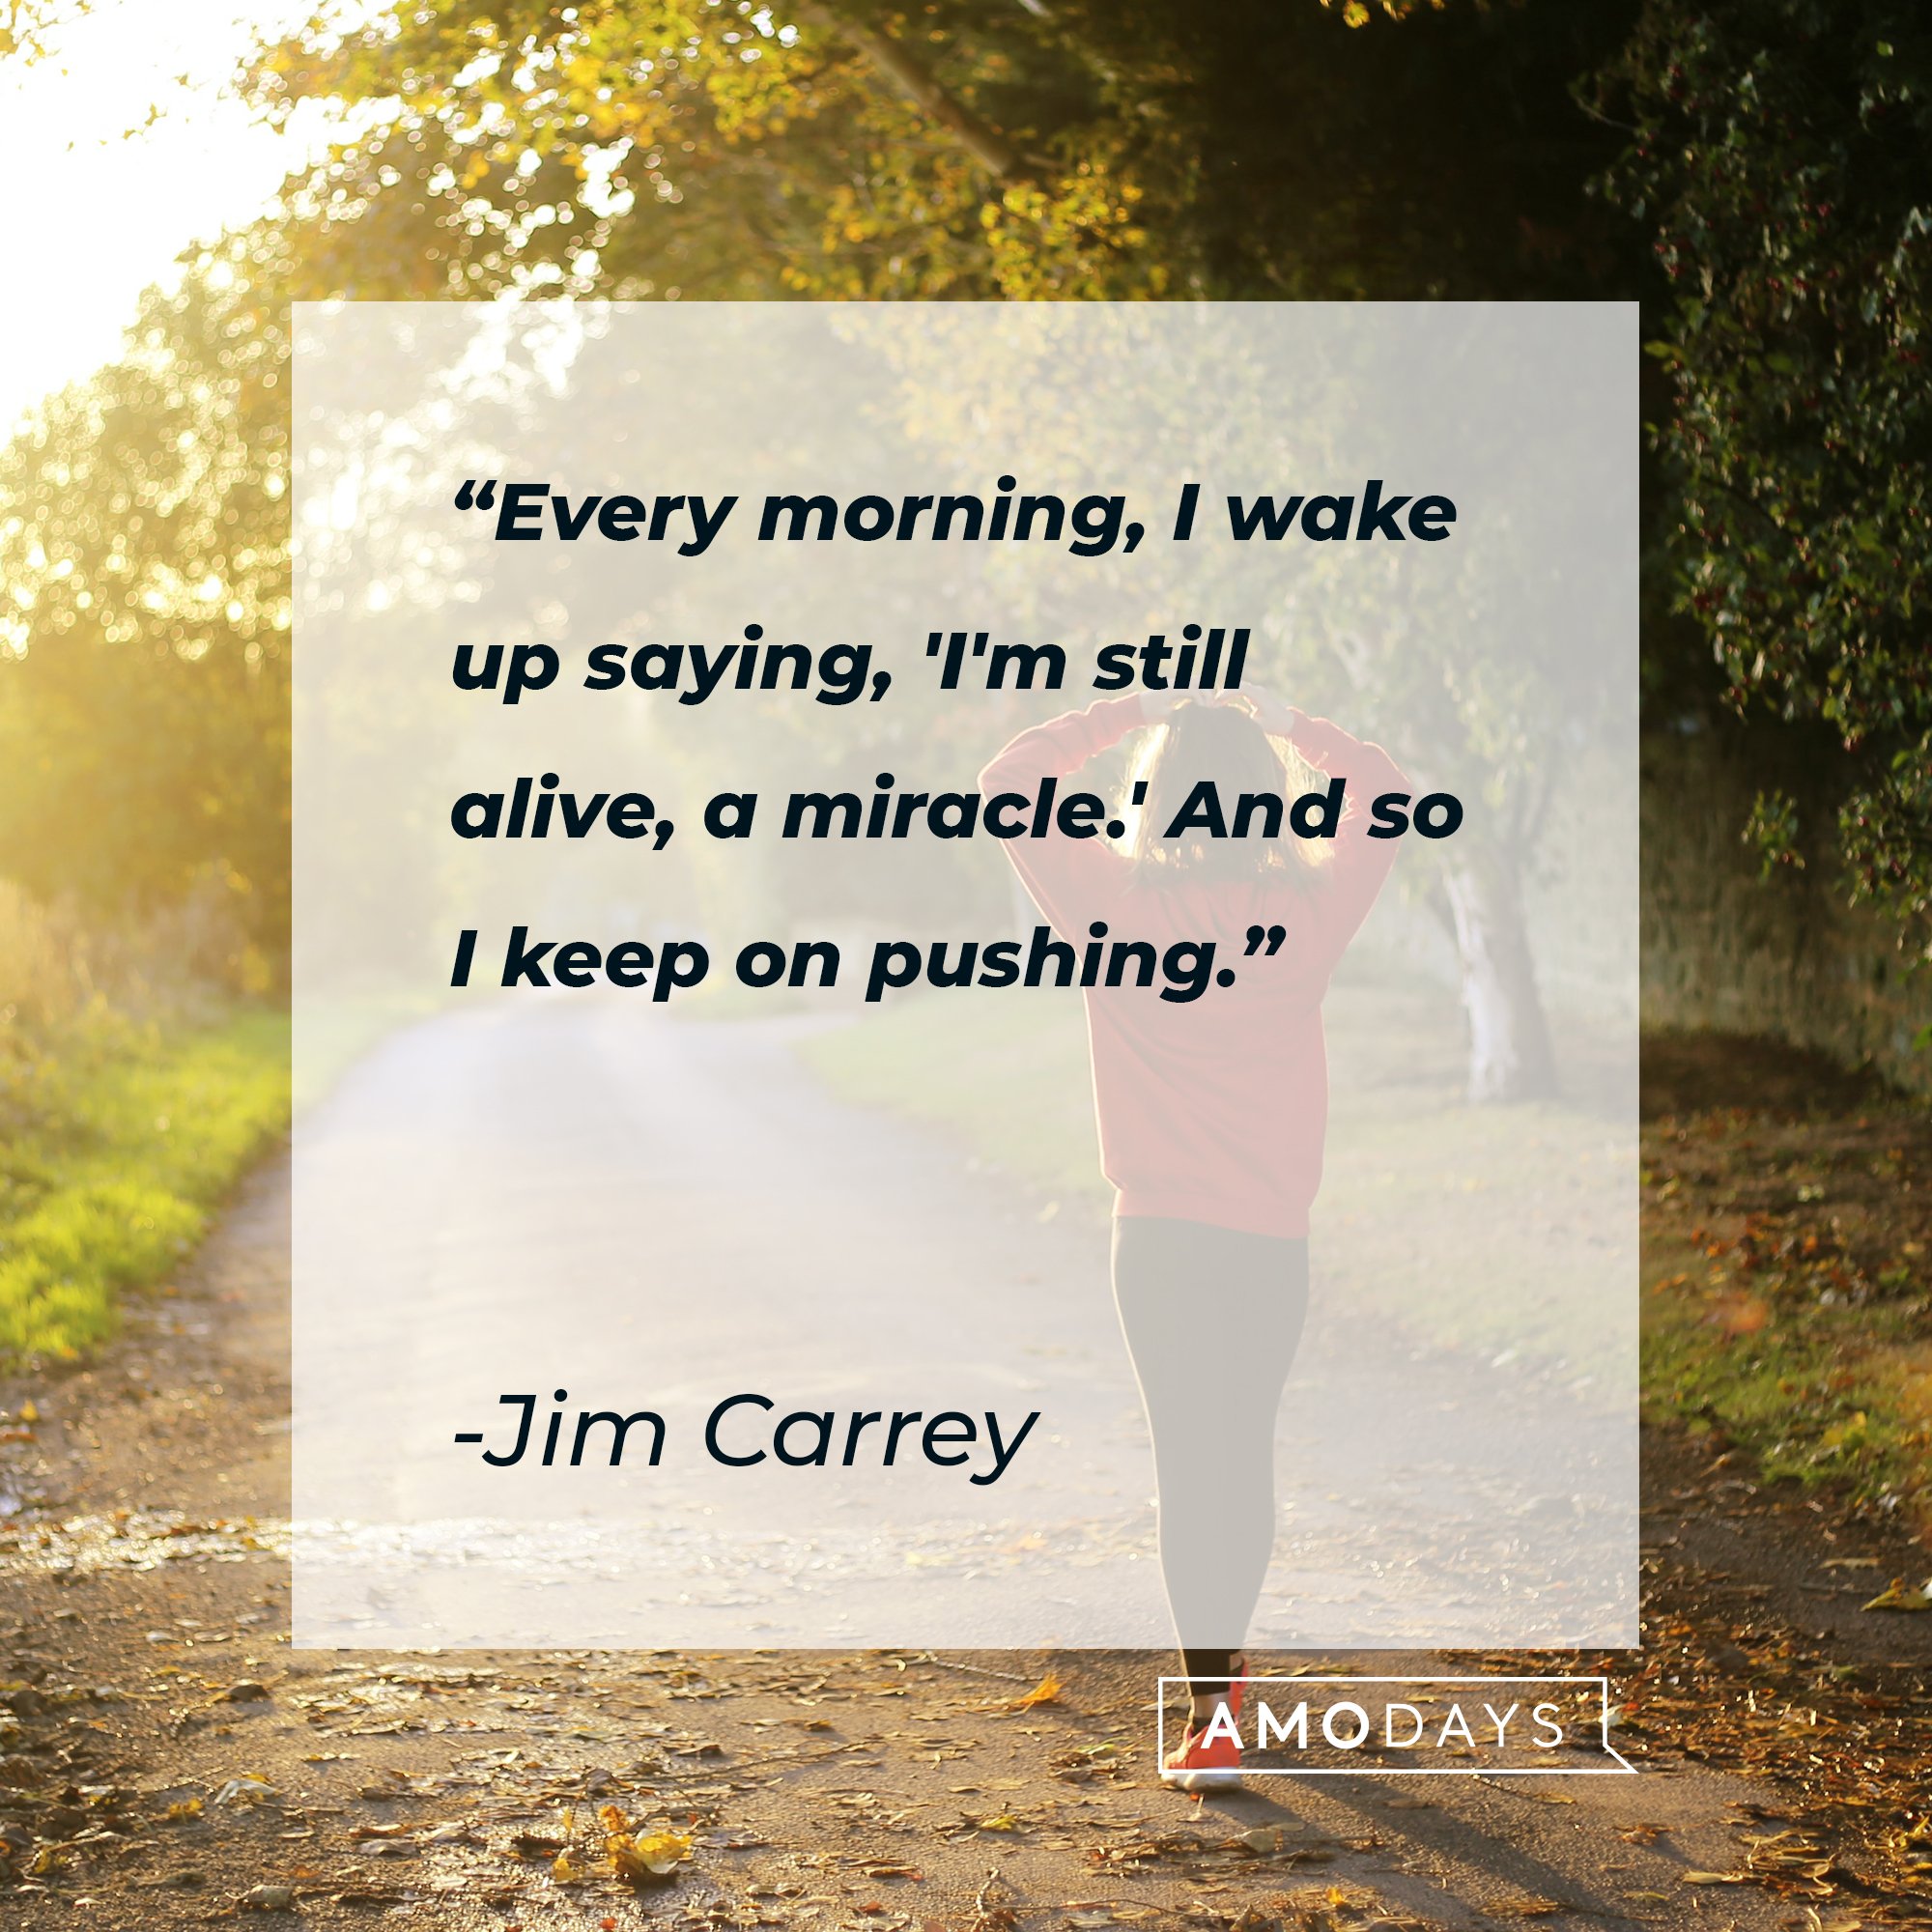 Jim Carrey's quote: "Every morning, I wake up saying, 'I'm still alive, a miracle.' And so I keep on pushing." | Image: AmoDays 